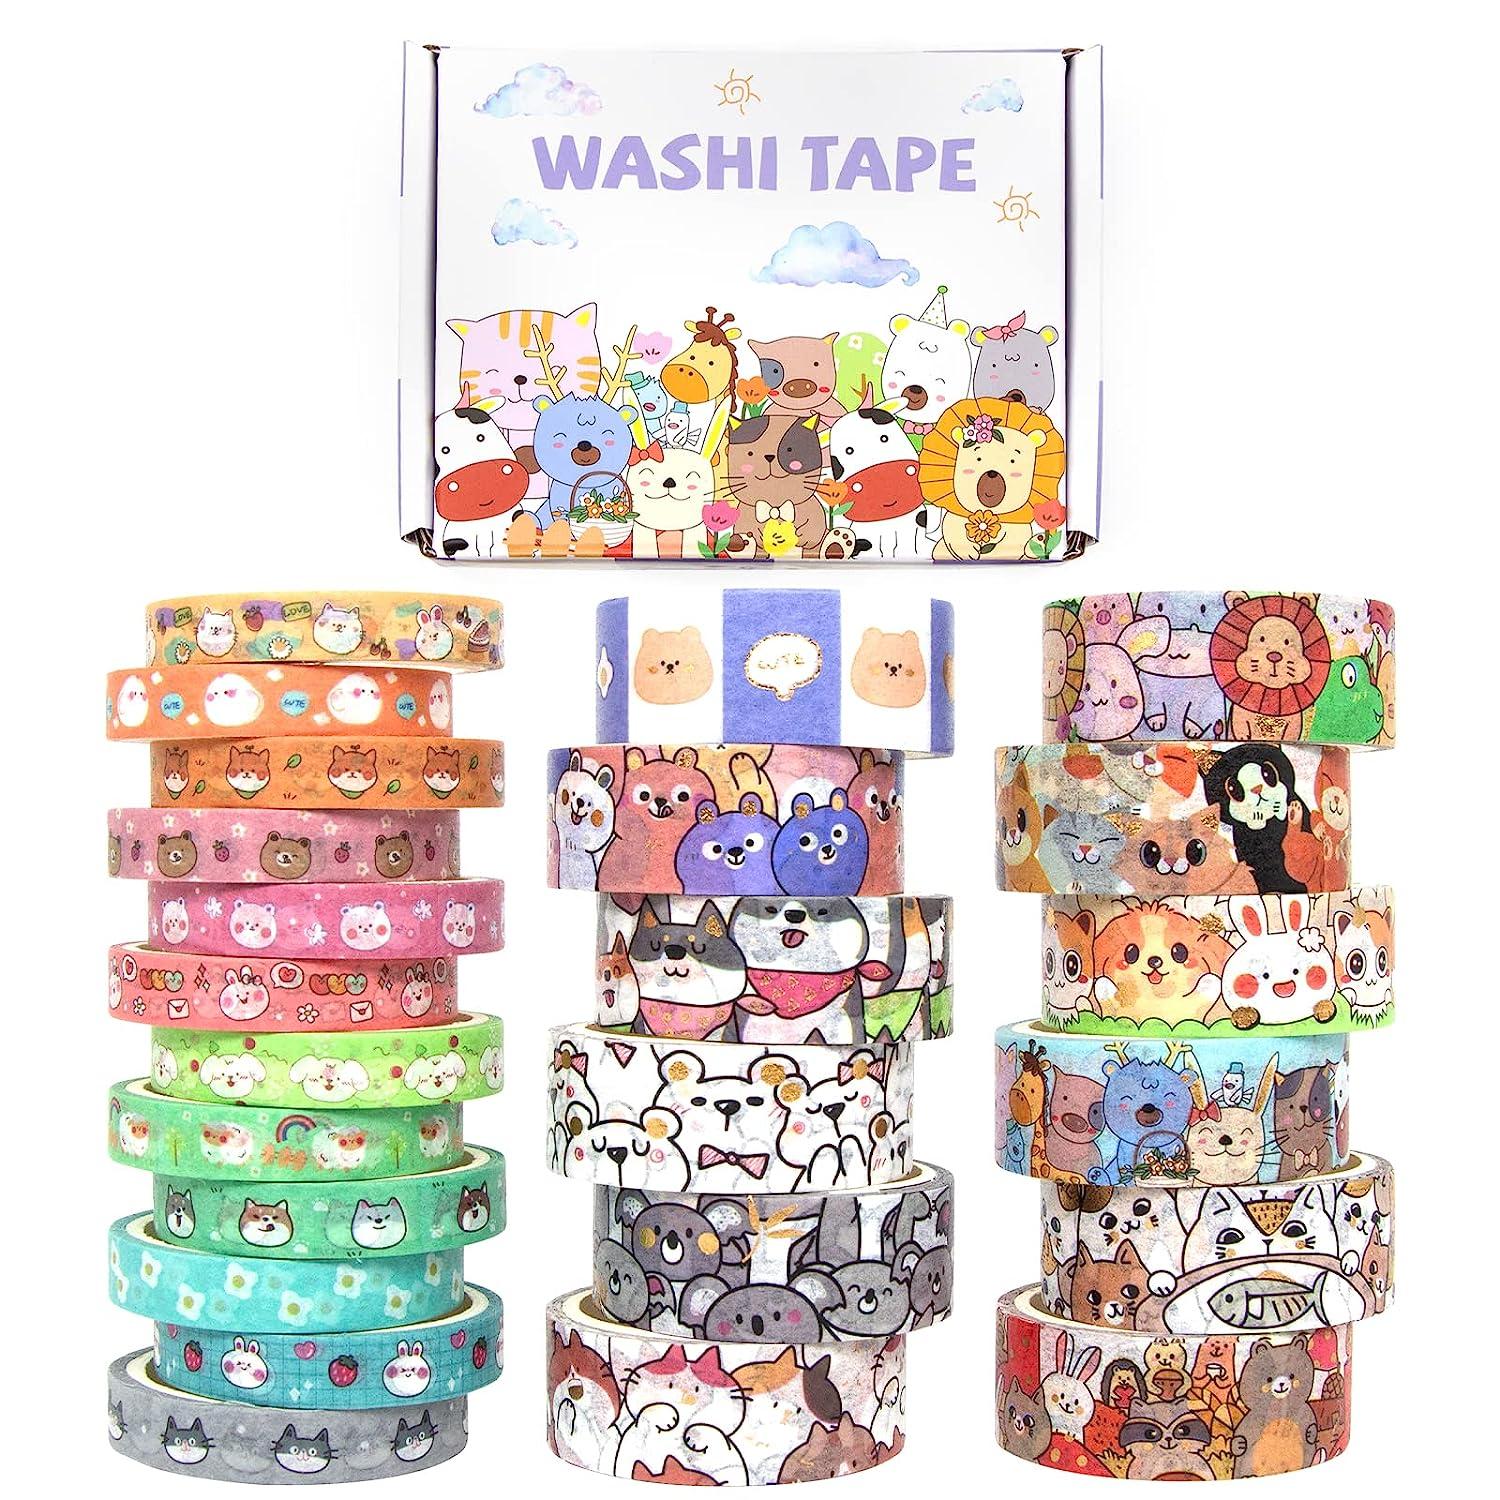 Cute Washi Tape Set - 100 Rolls Kawaii Cartoon Print Washi Tapes Decorative  Masking Tape for Journaling, Scrapbooking, Kids DIY Crafts, School